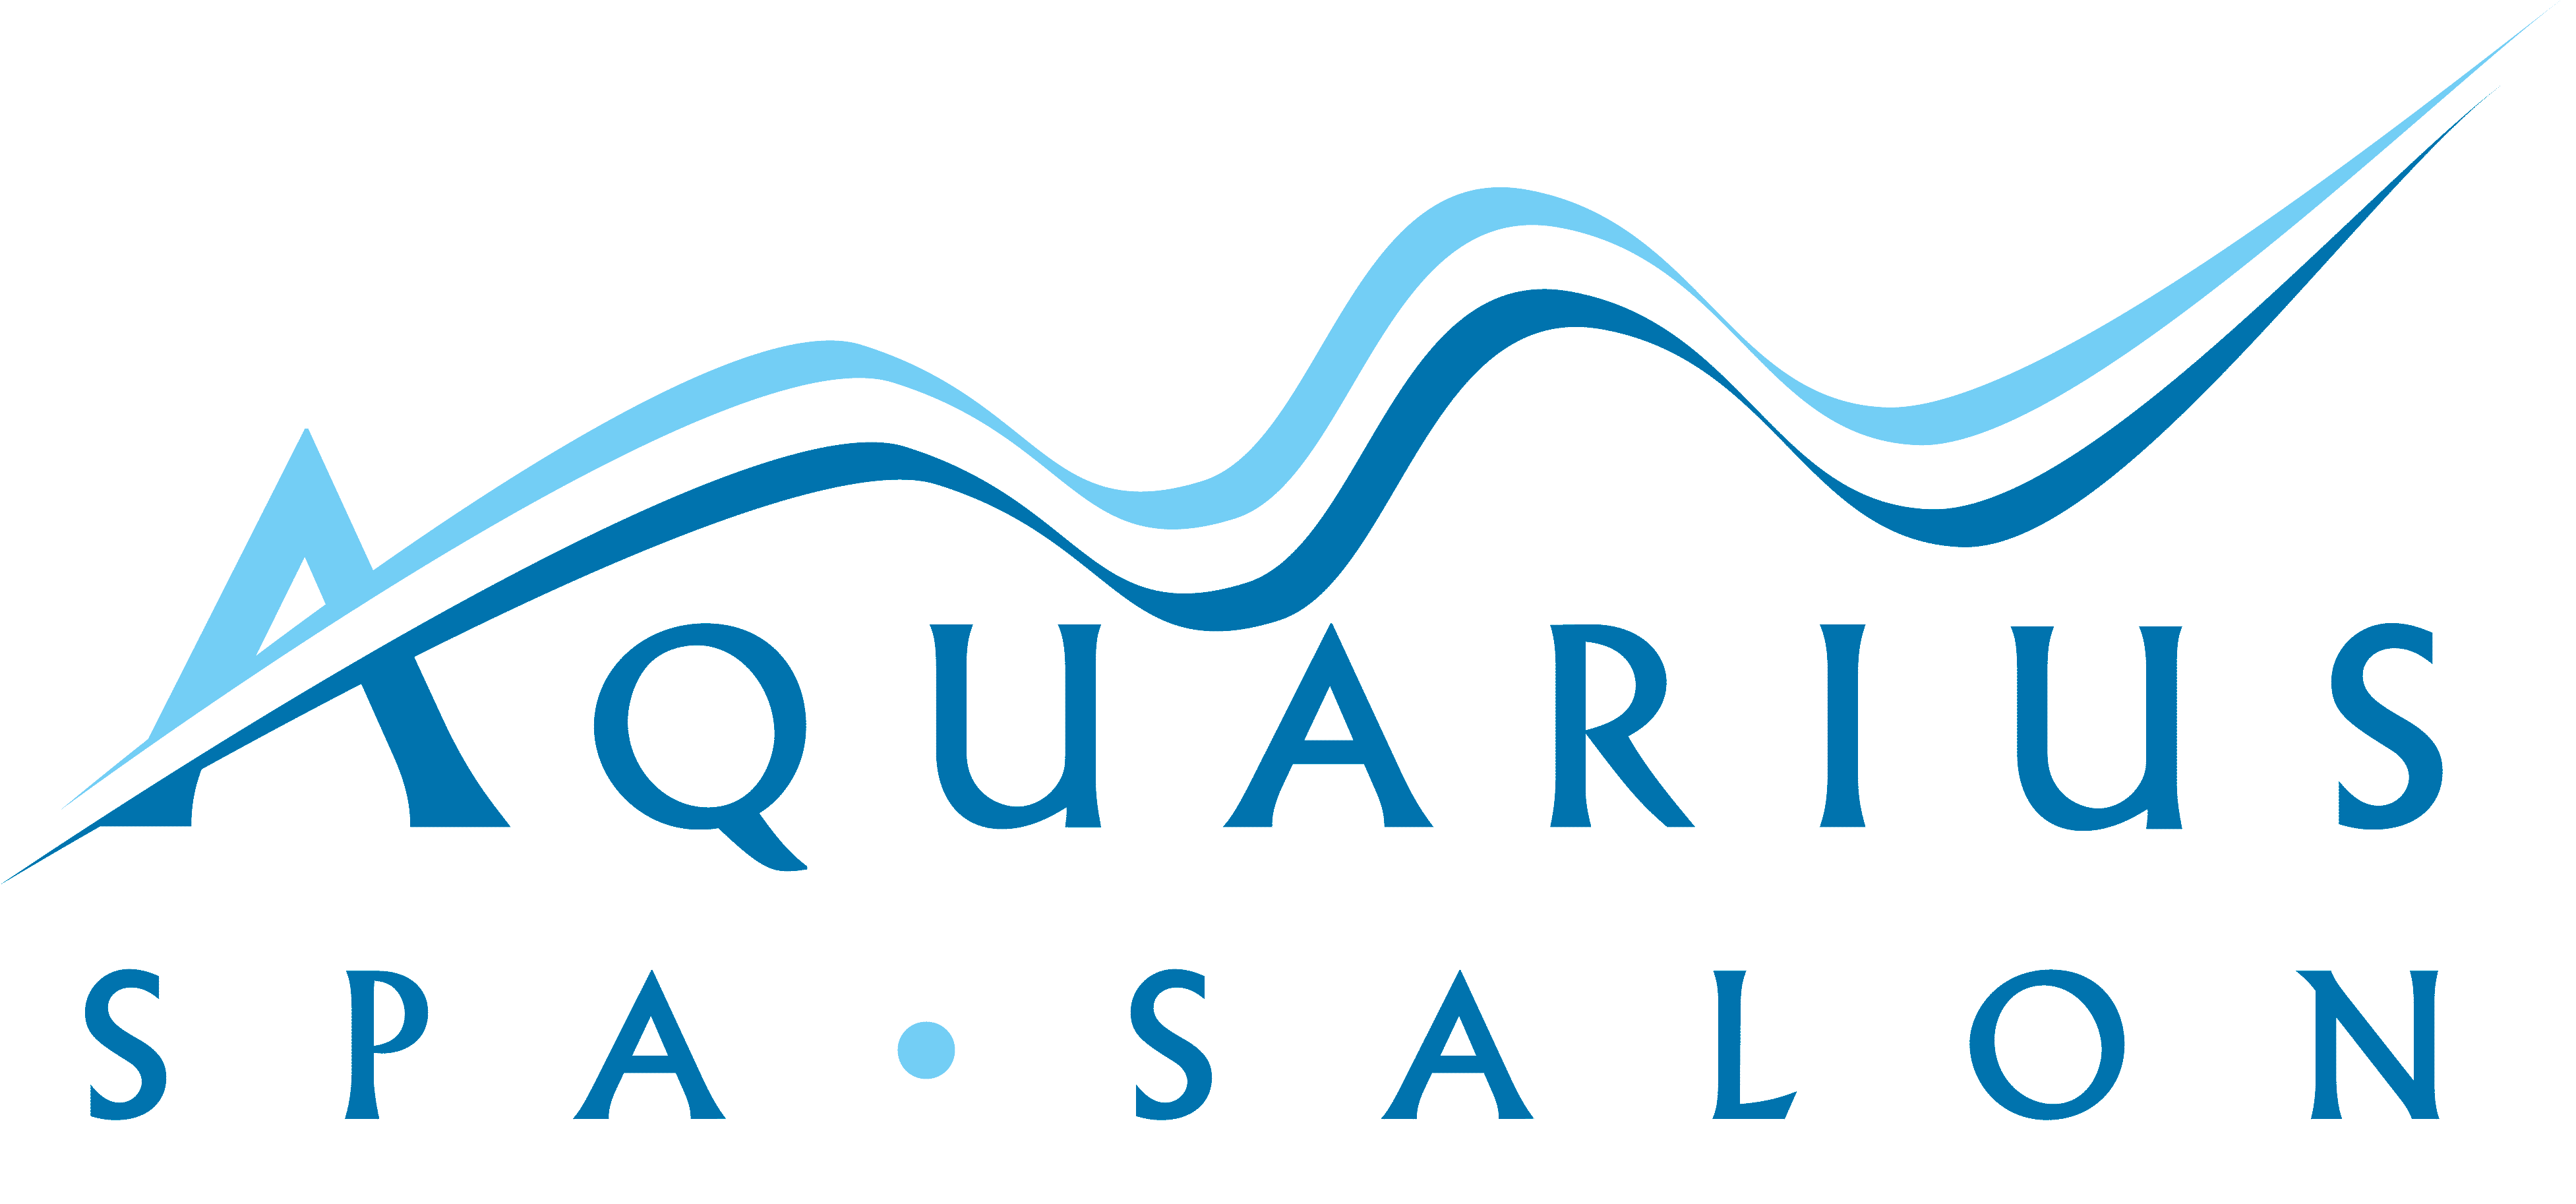 Aquarius Spa & Salon - Chapin, SC